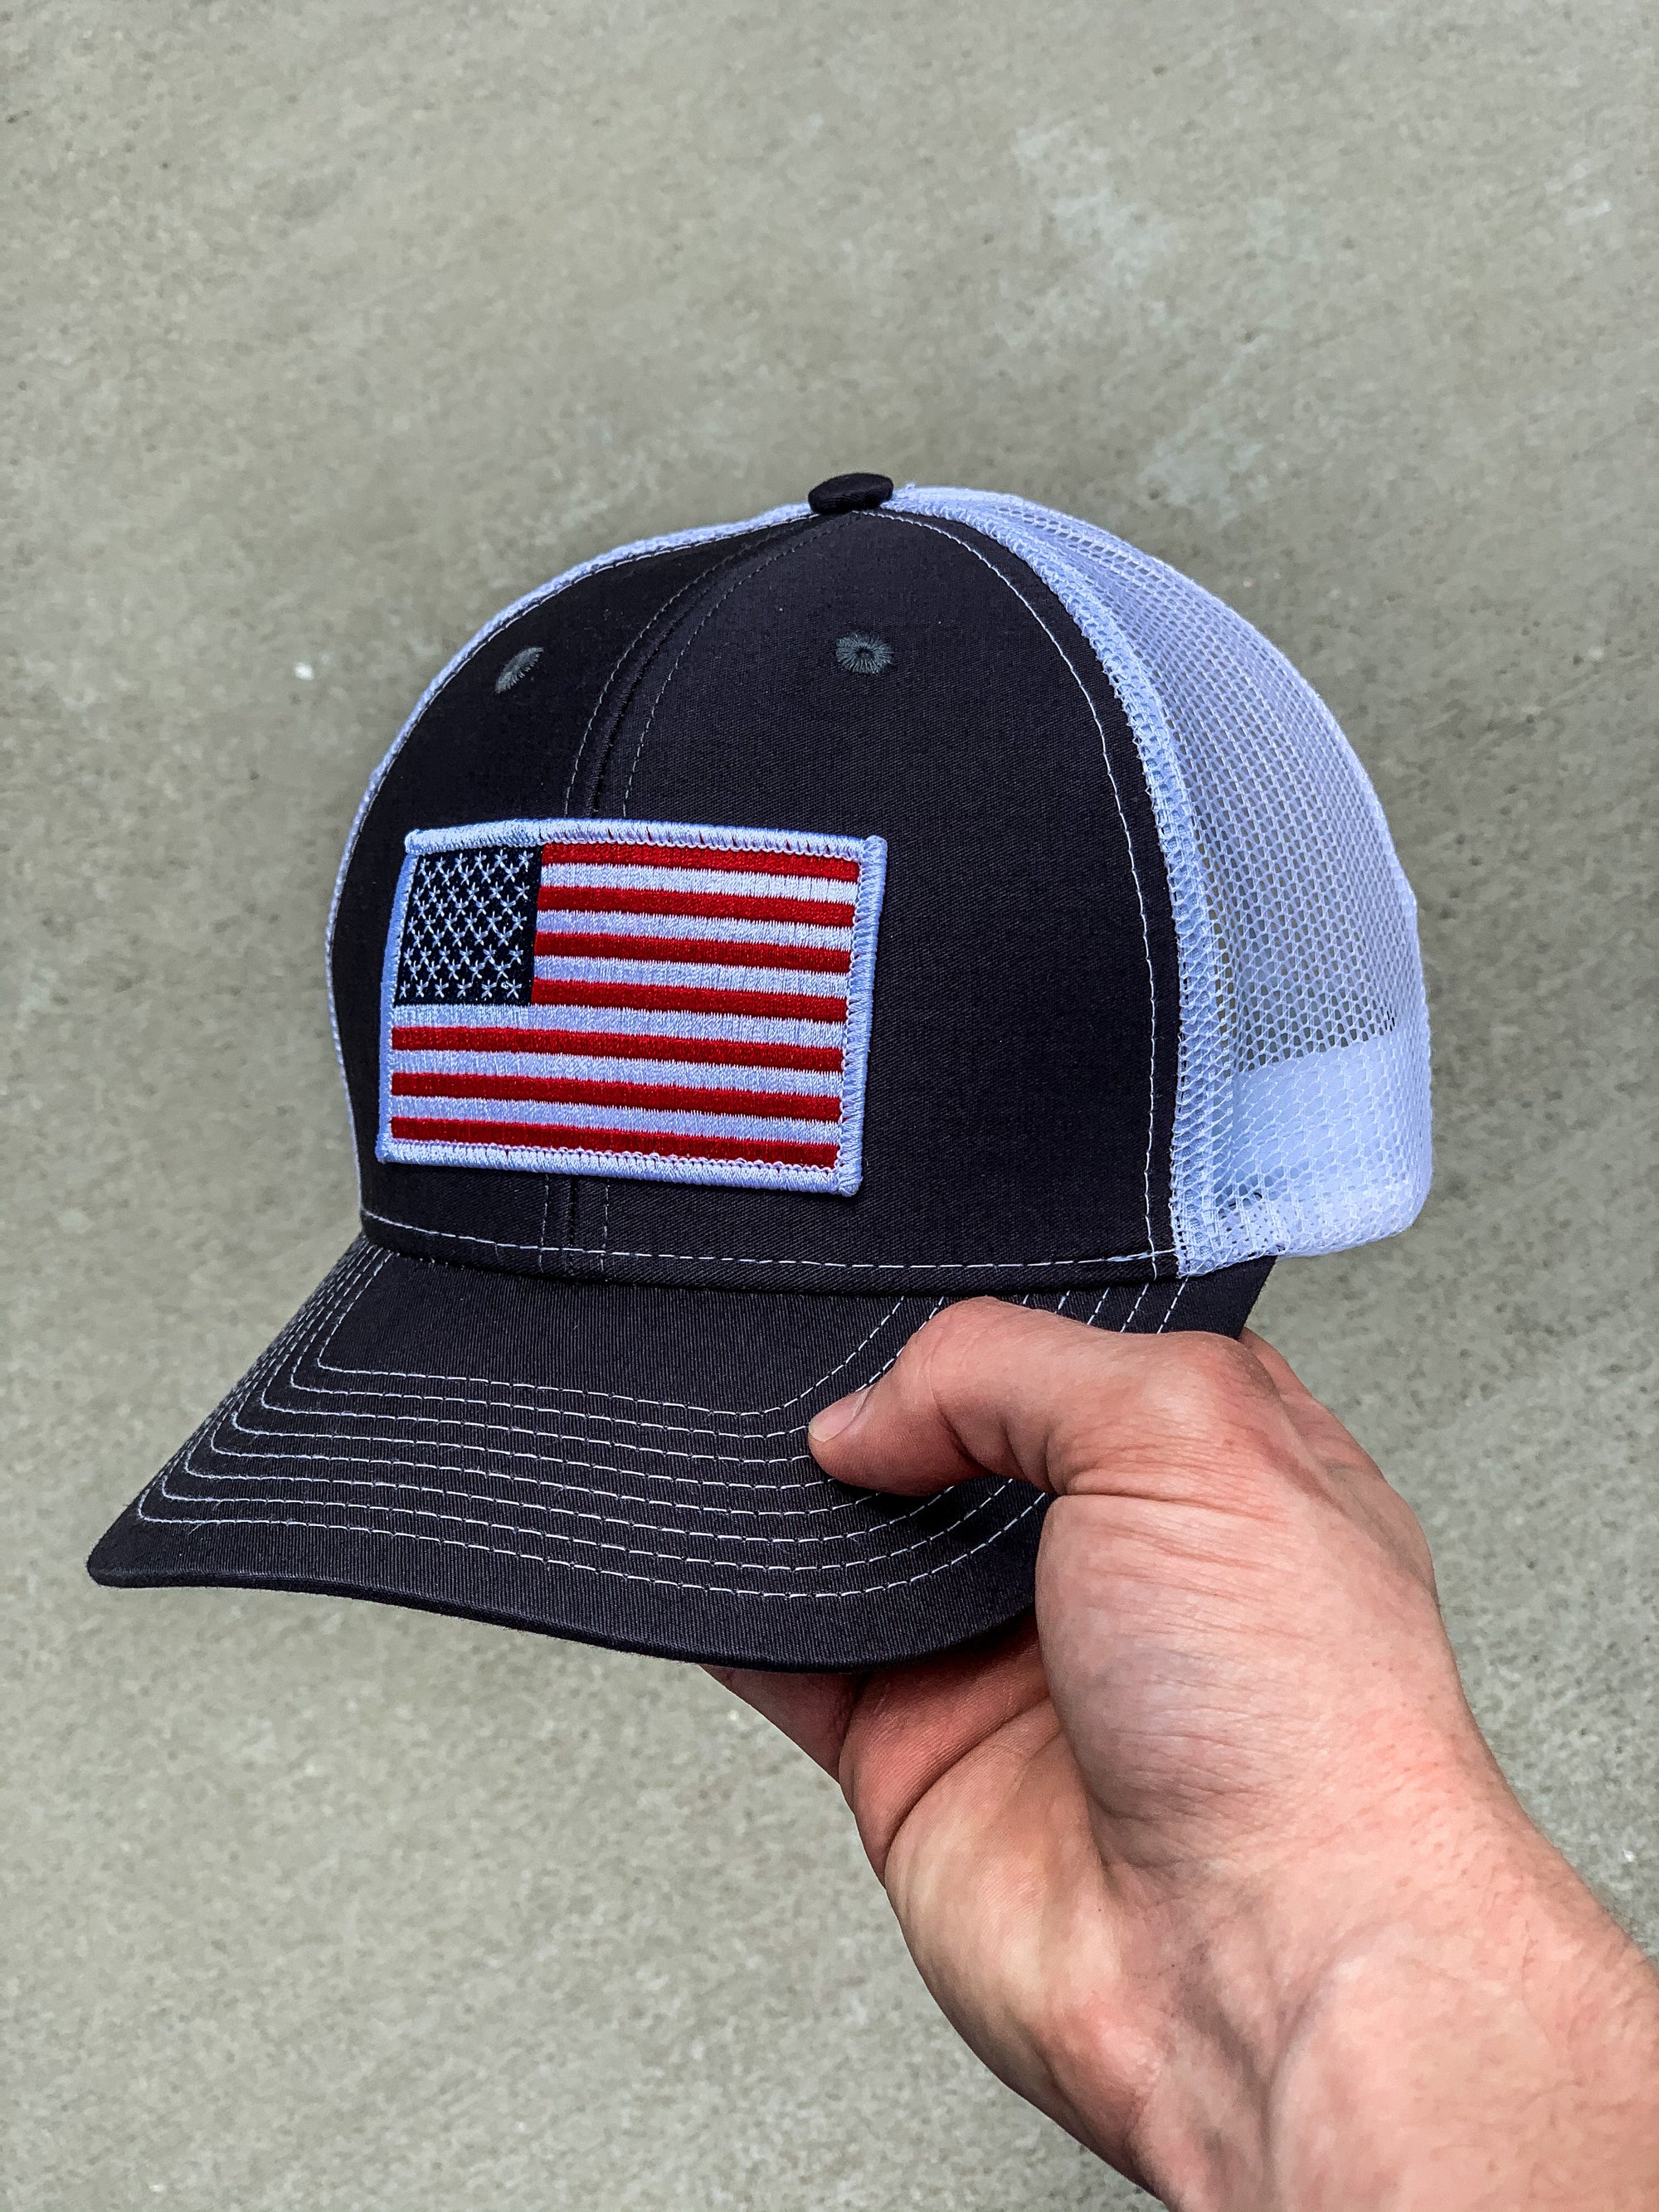 Patriotic Trucker Hats From Patriot Crew